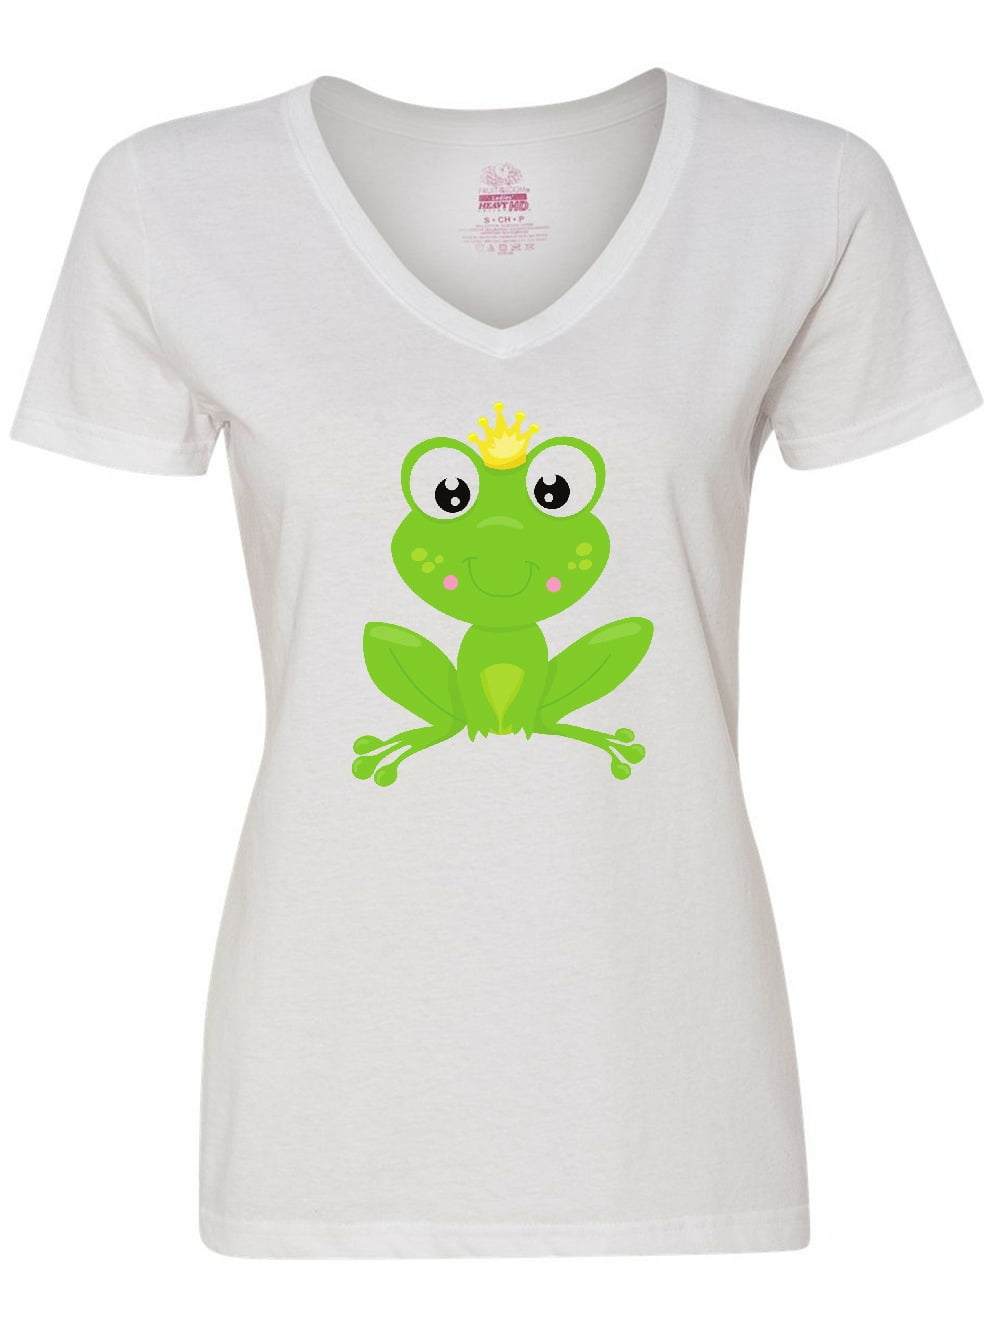 Frog reptile graphic shirt for kids adult animal shirt